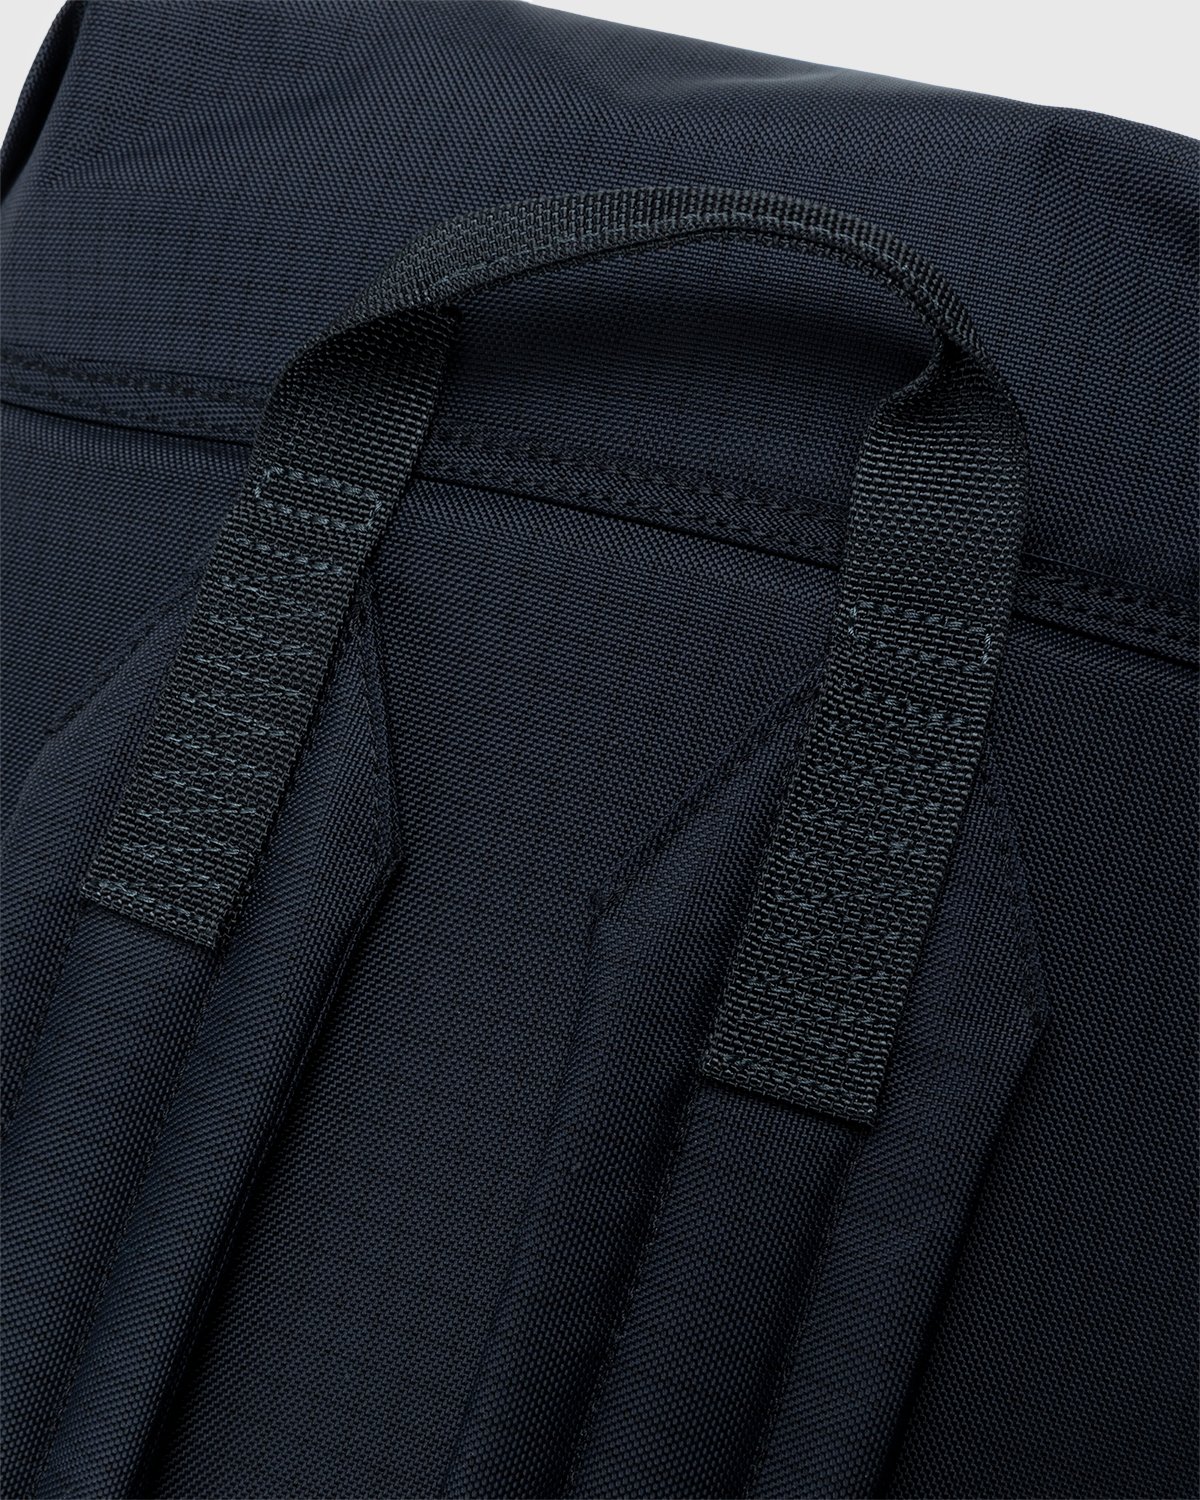 Acne Studios - Large Ripstop Backpack Black - Accessories - Black - Image 6